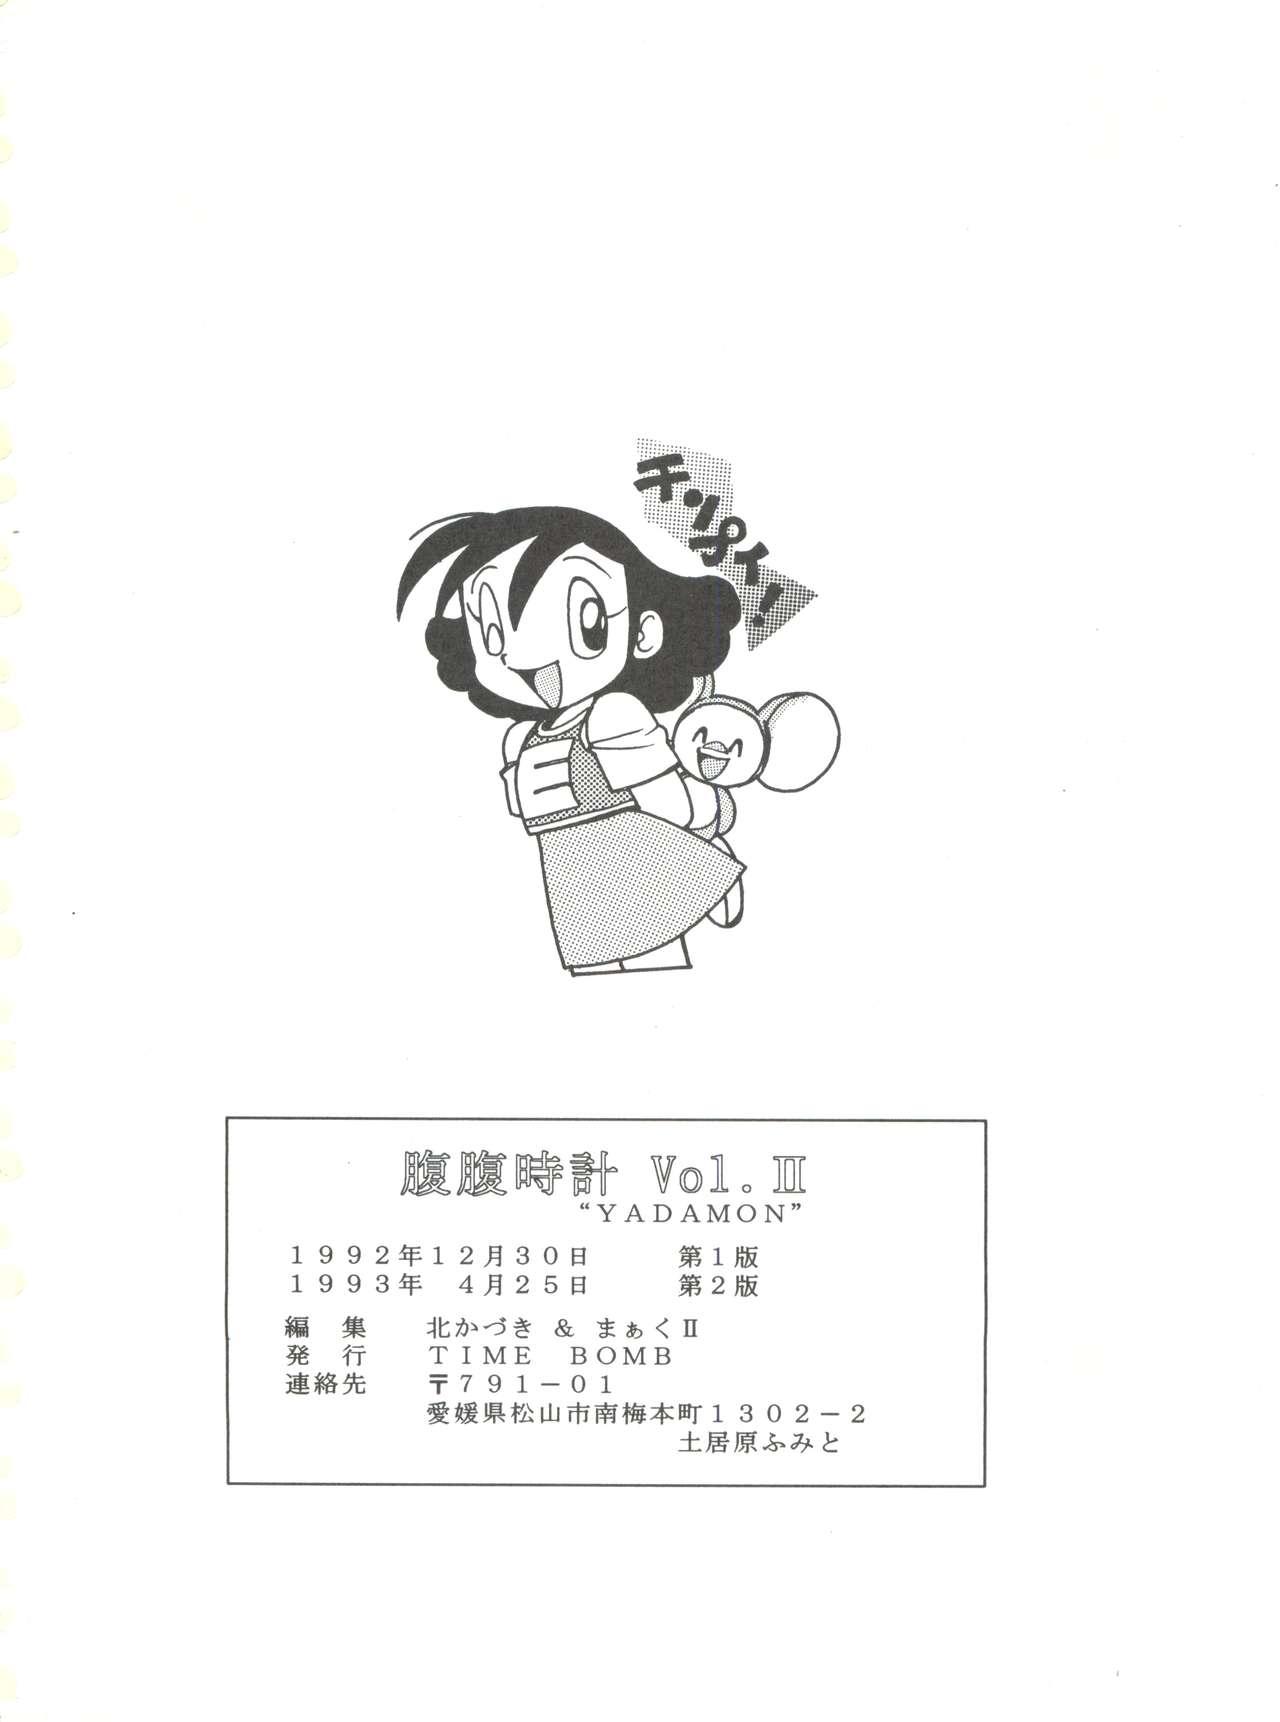 Hara Hara Dokei Vol. II "Yadamon" 45